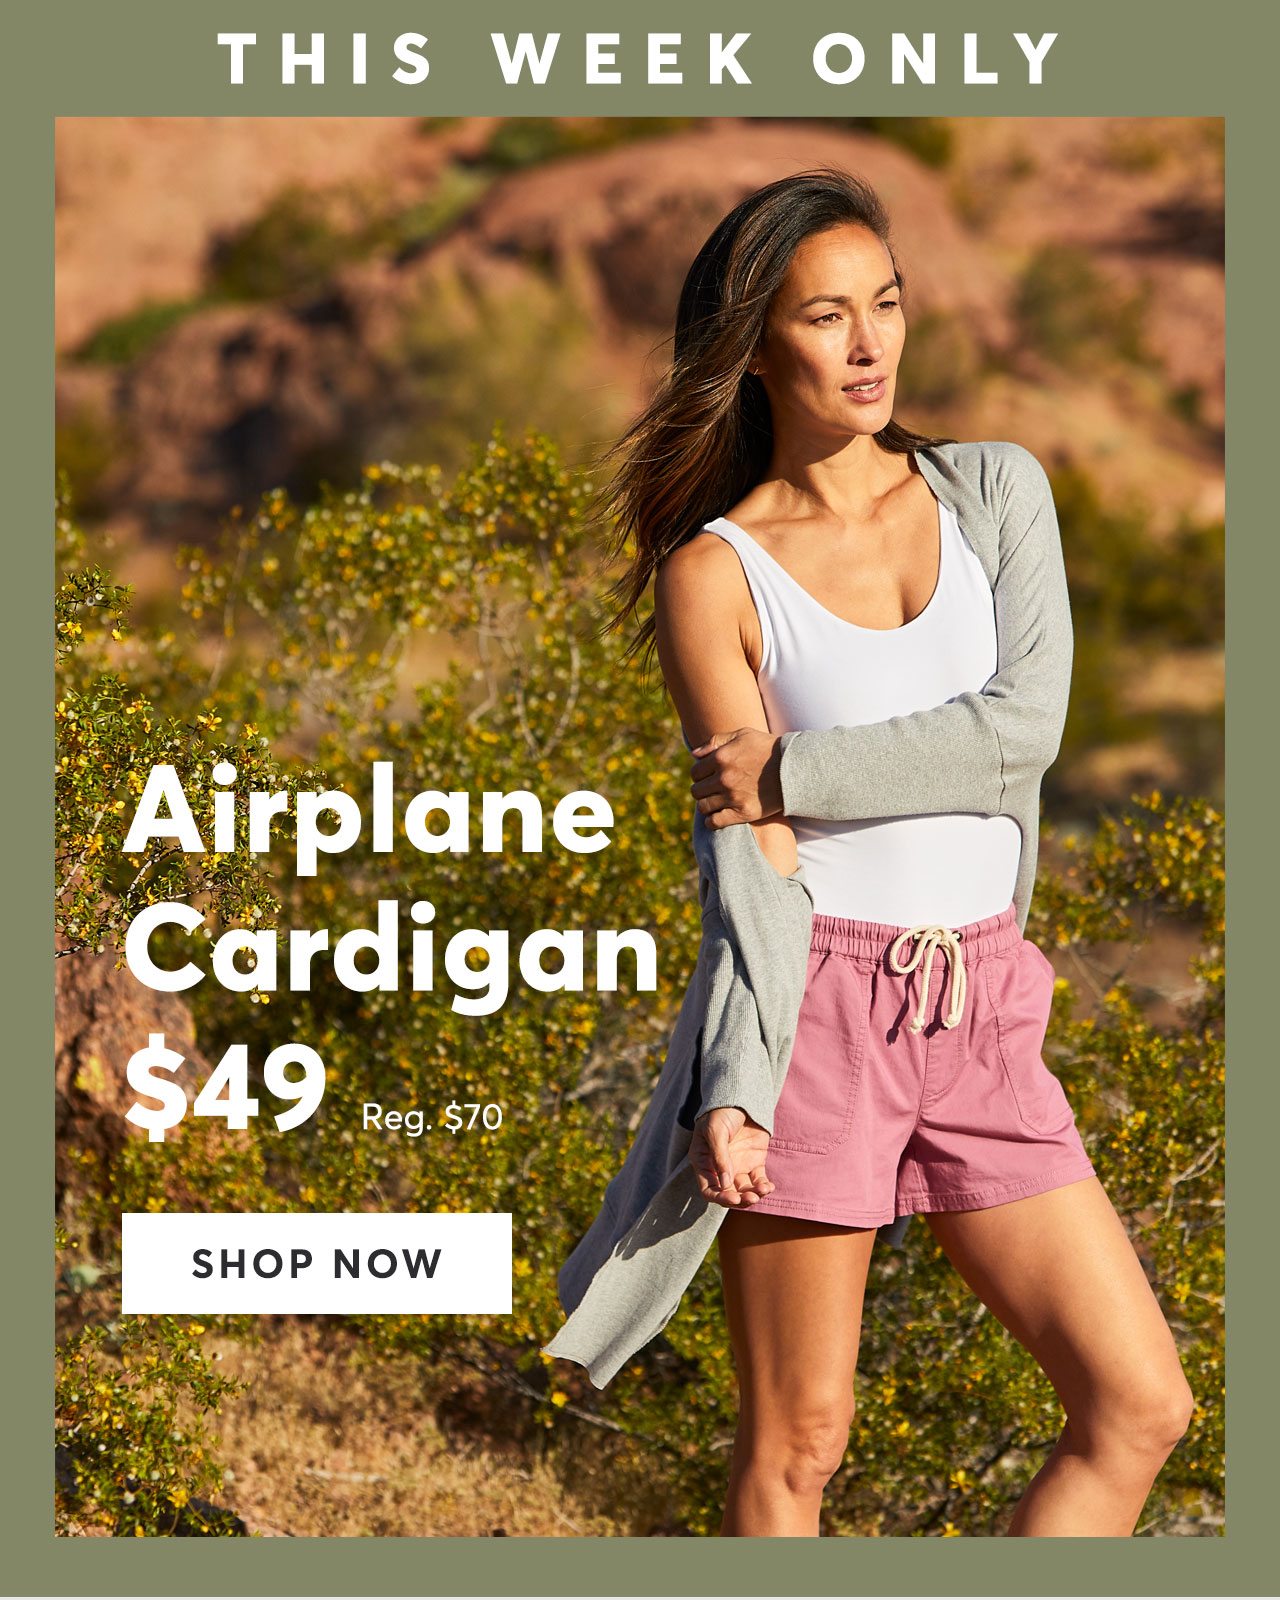 This week only! Airplane Cardigan $49, reg $70.